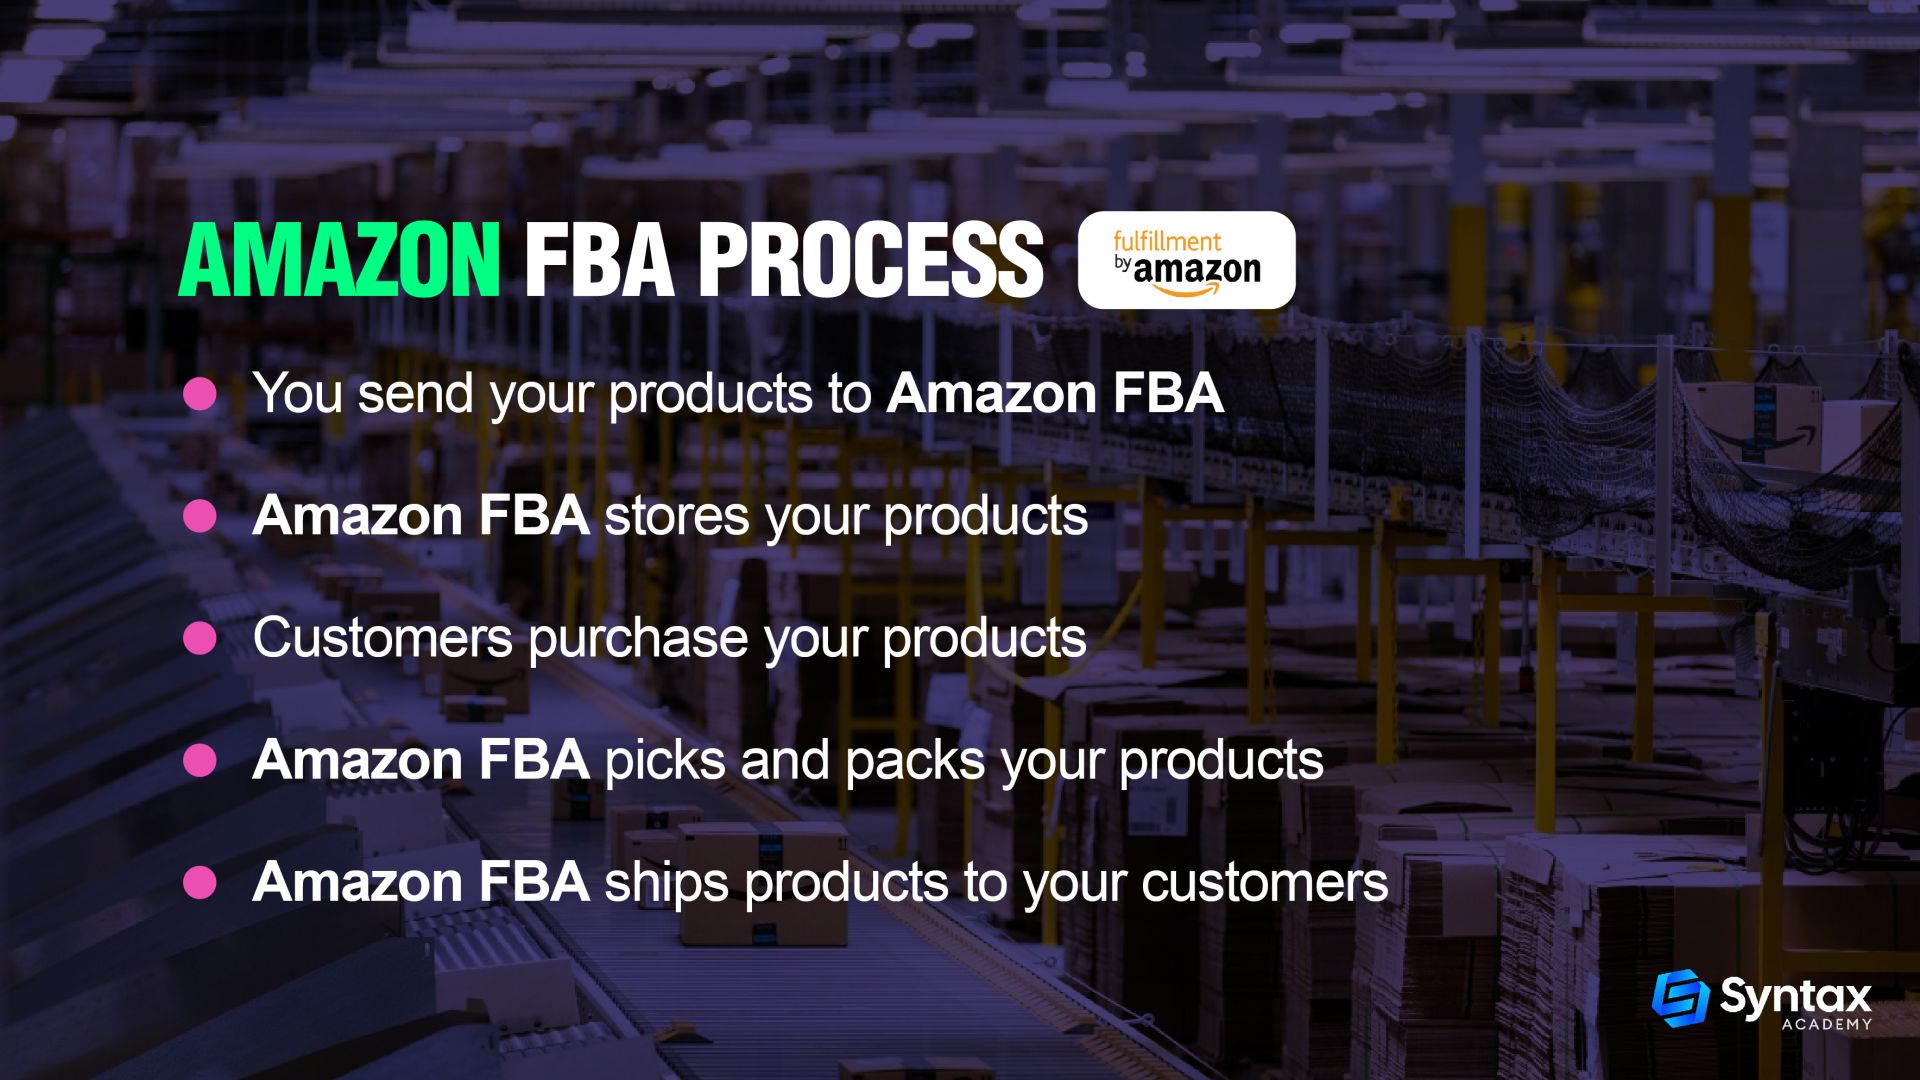 Amazon FBA Process 